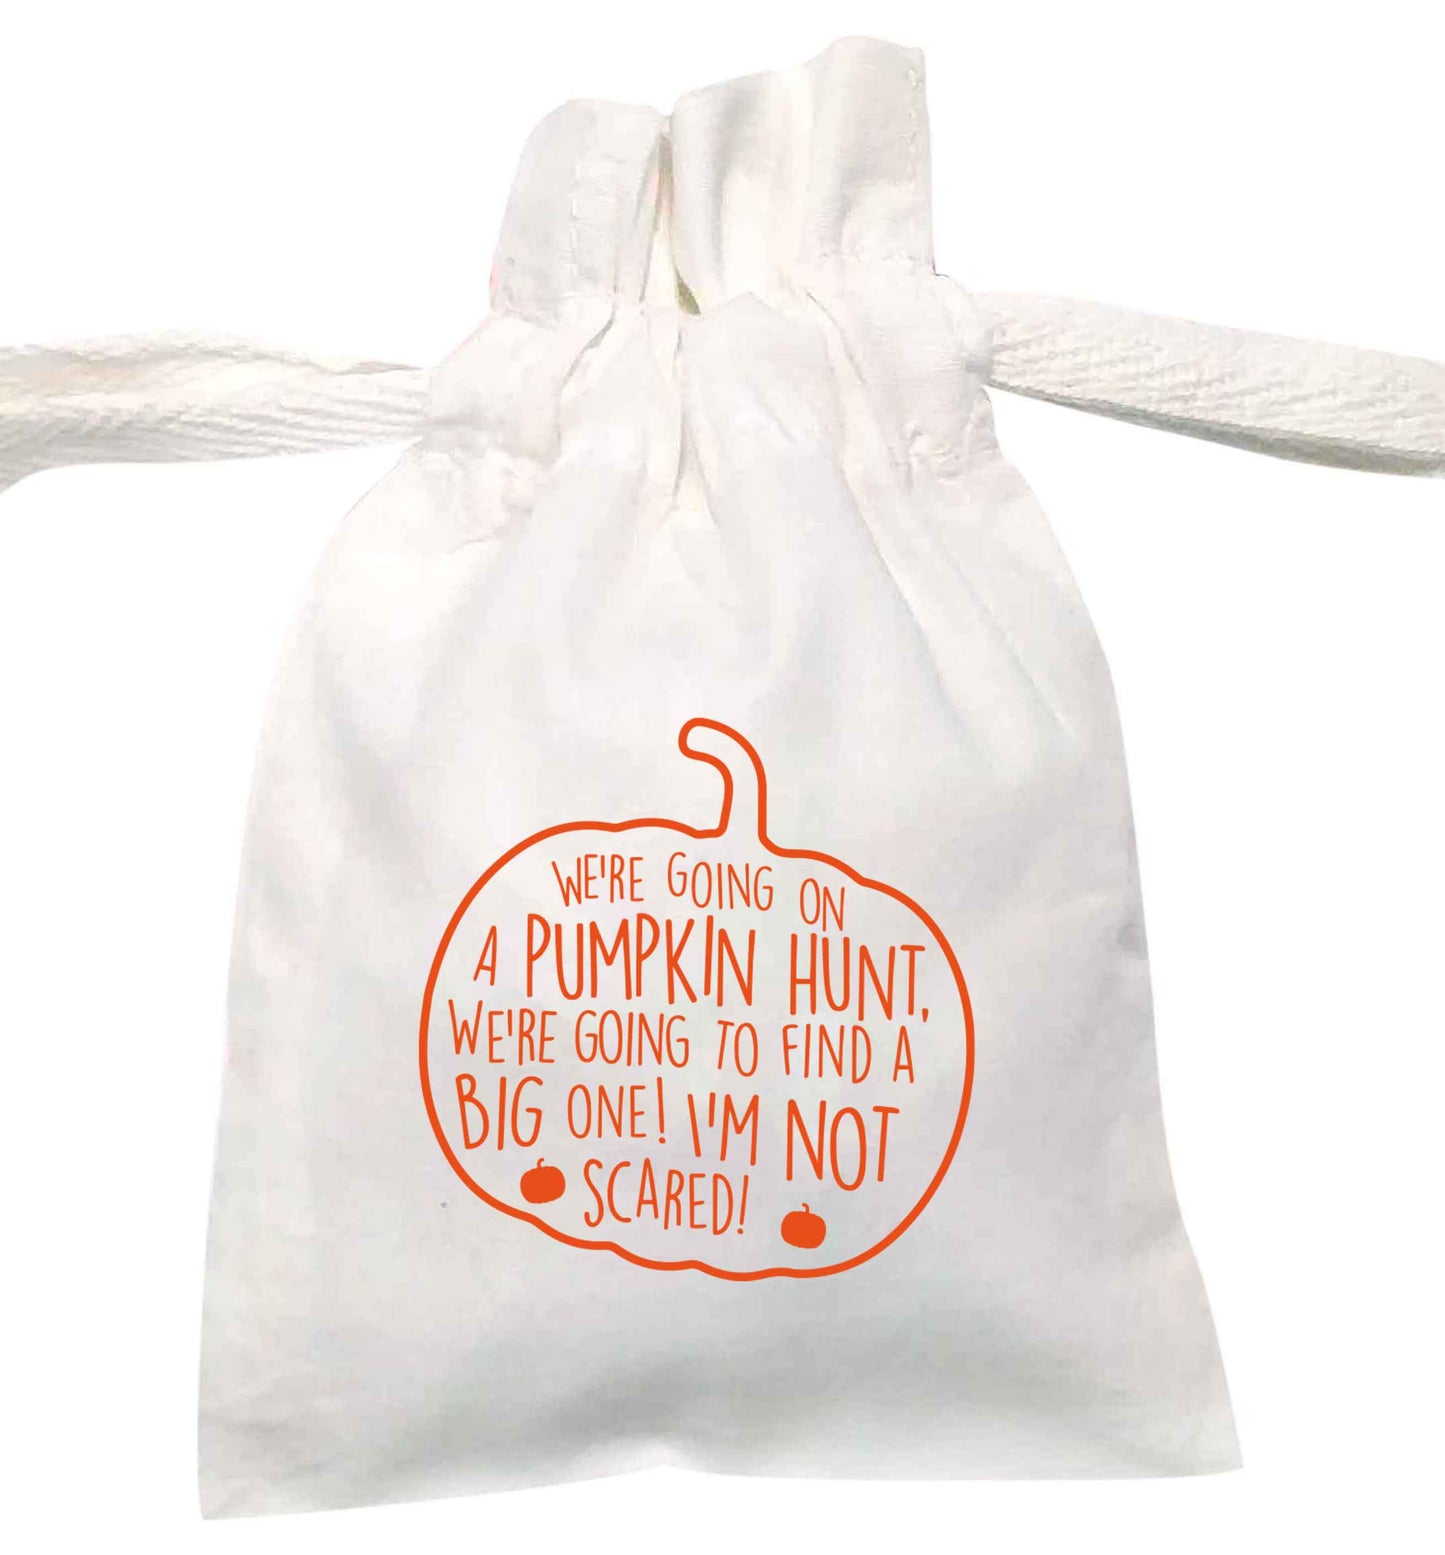 We're going on a pumpkin hunt | XS - L | Pouch / Drawstring bag / Sack | Organic Cotton | Bulk discounts available!